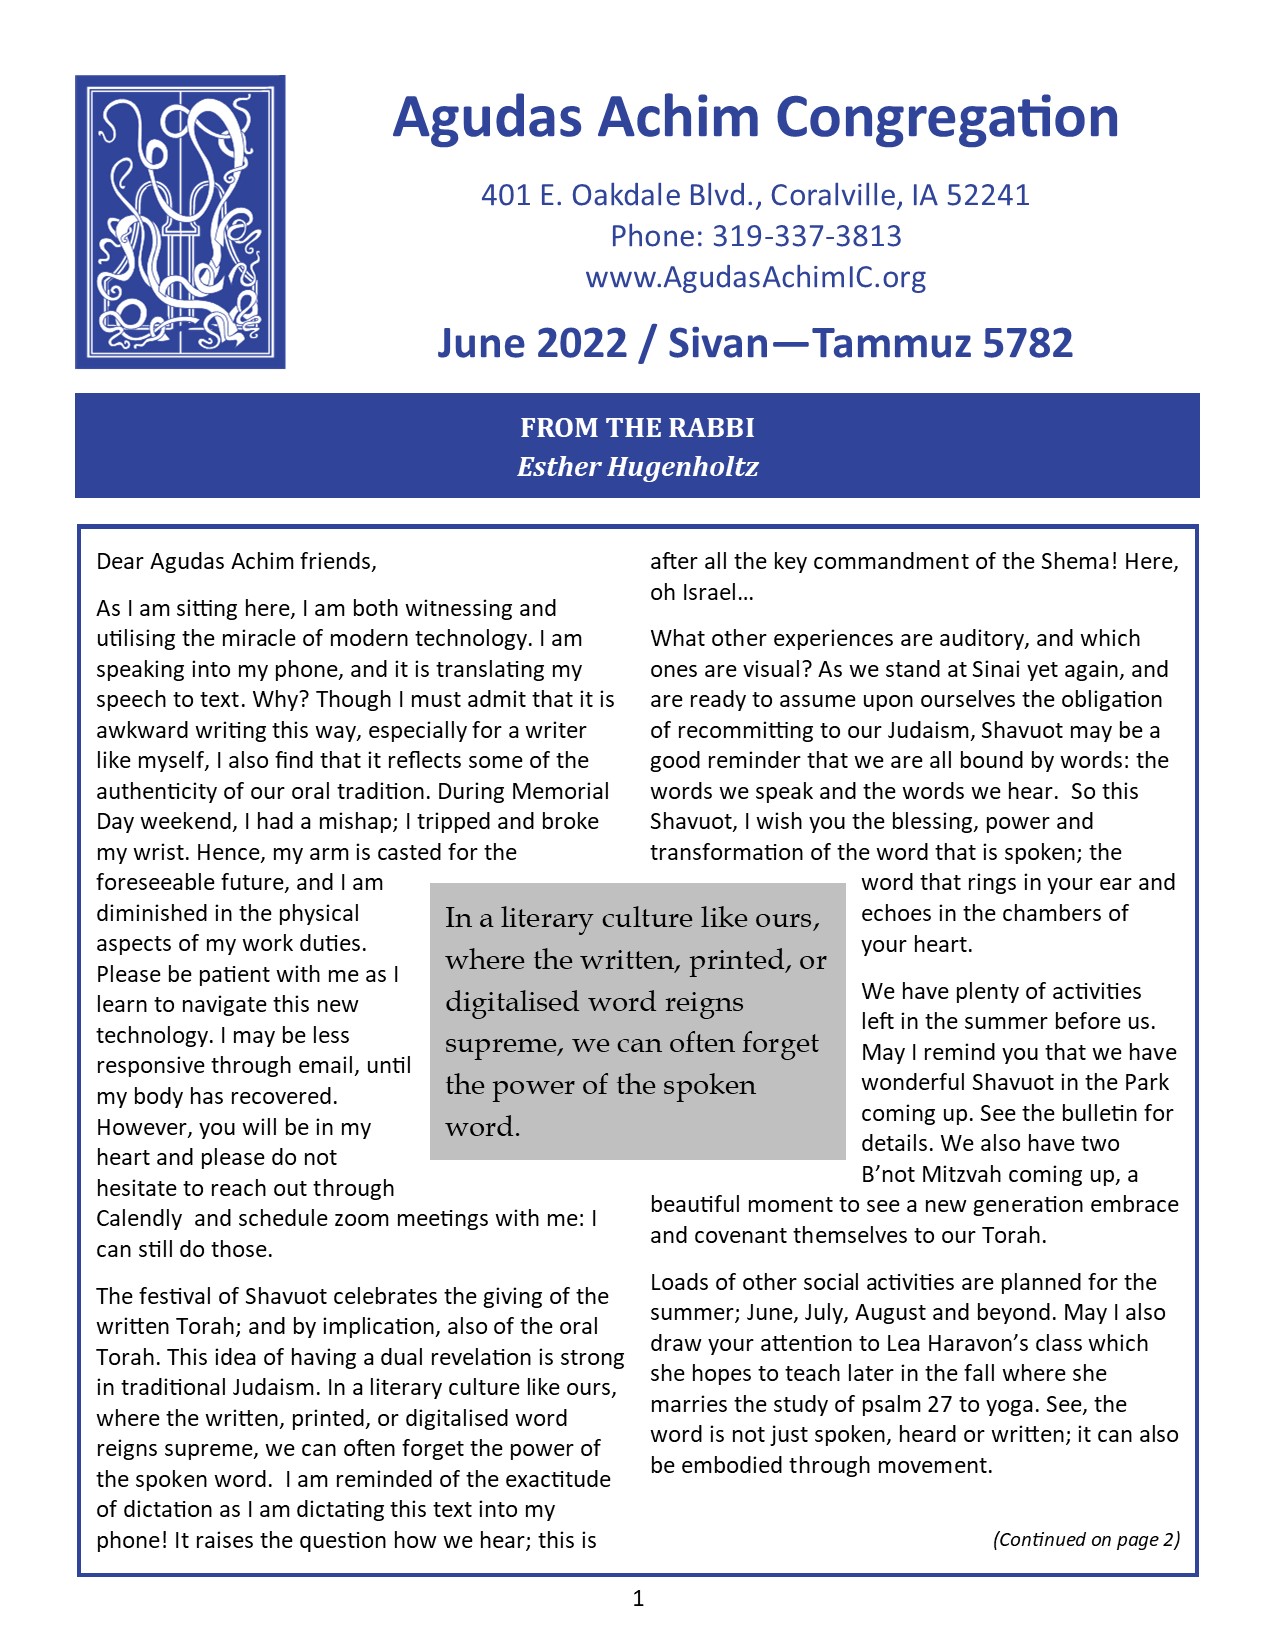 June 2022 Bulletin Cover